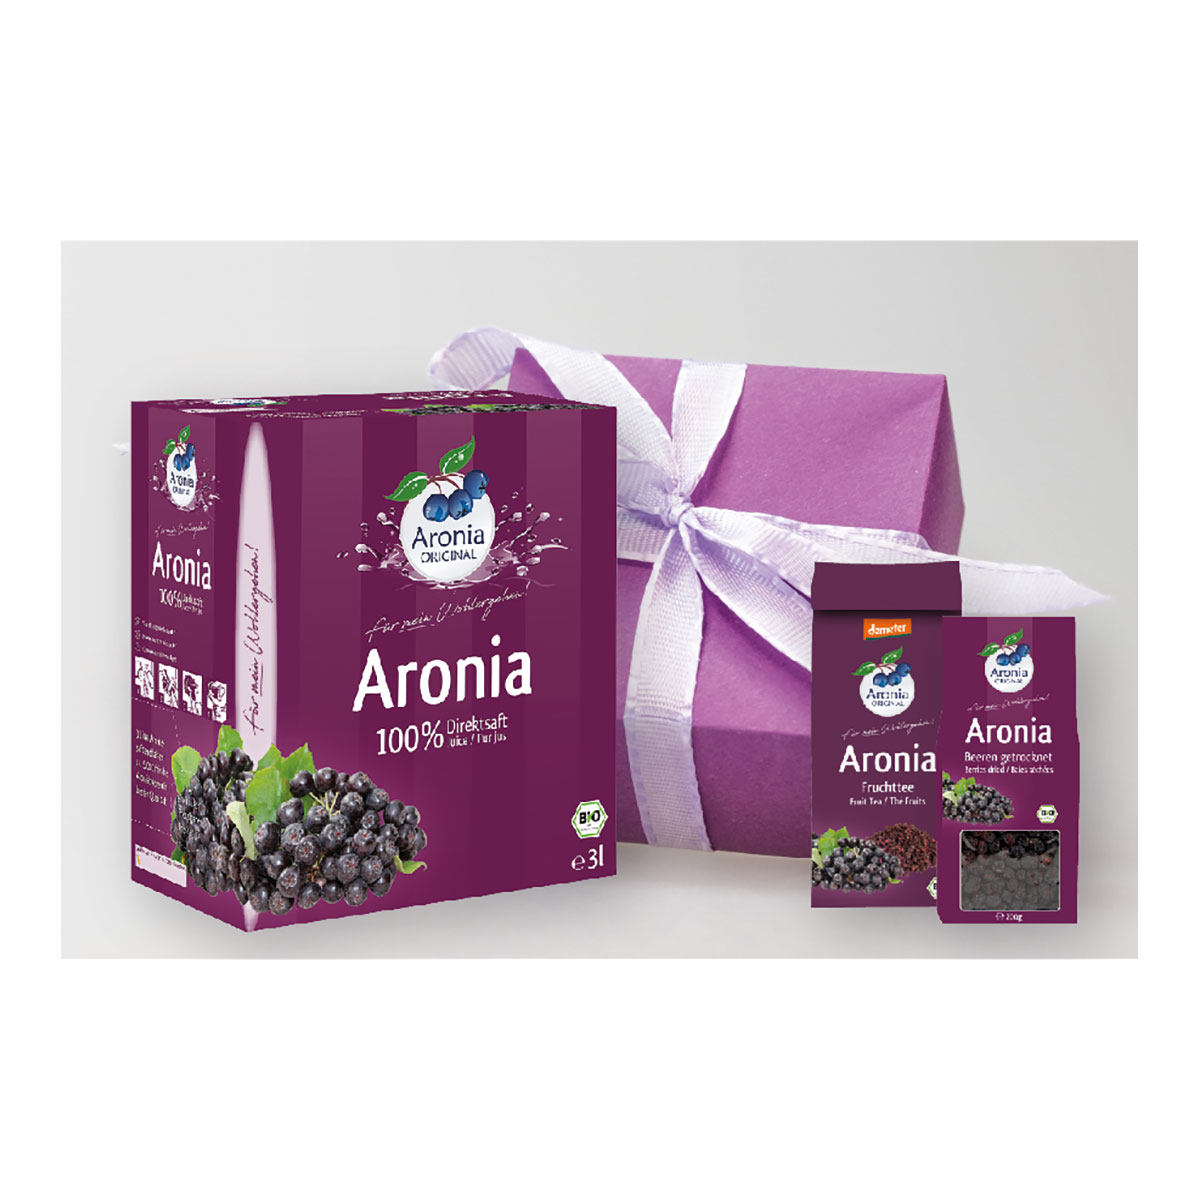 Aronia - Unsere Klassiker, Paket